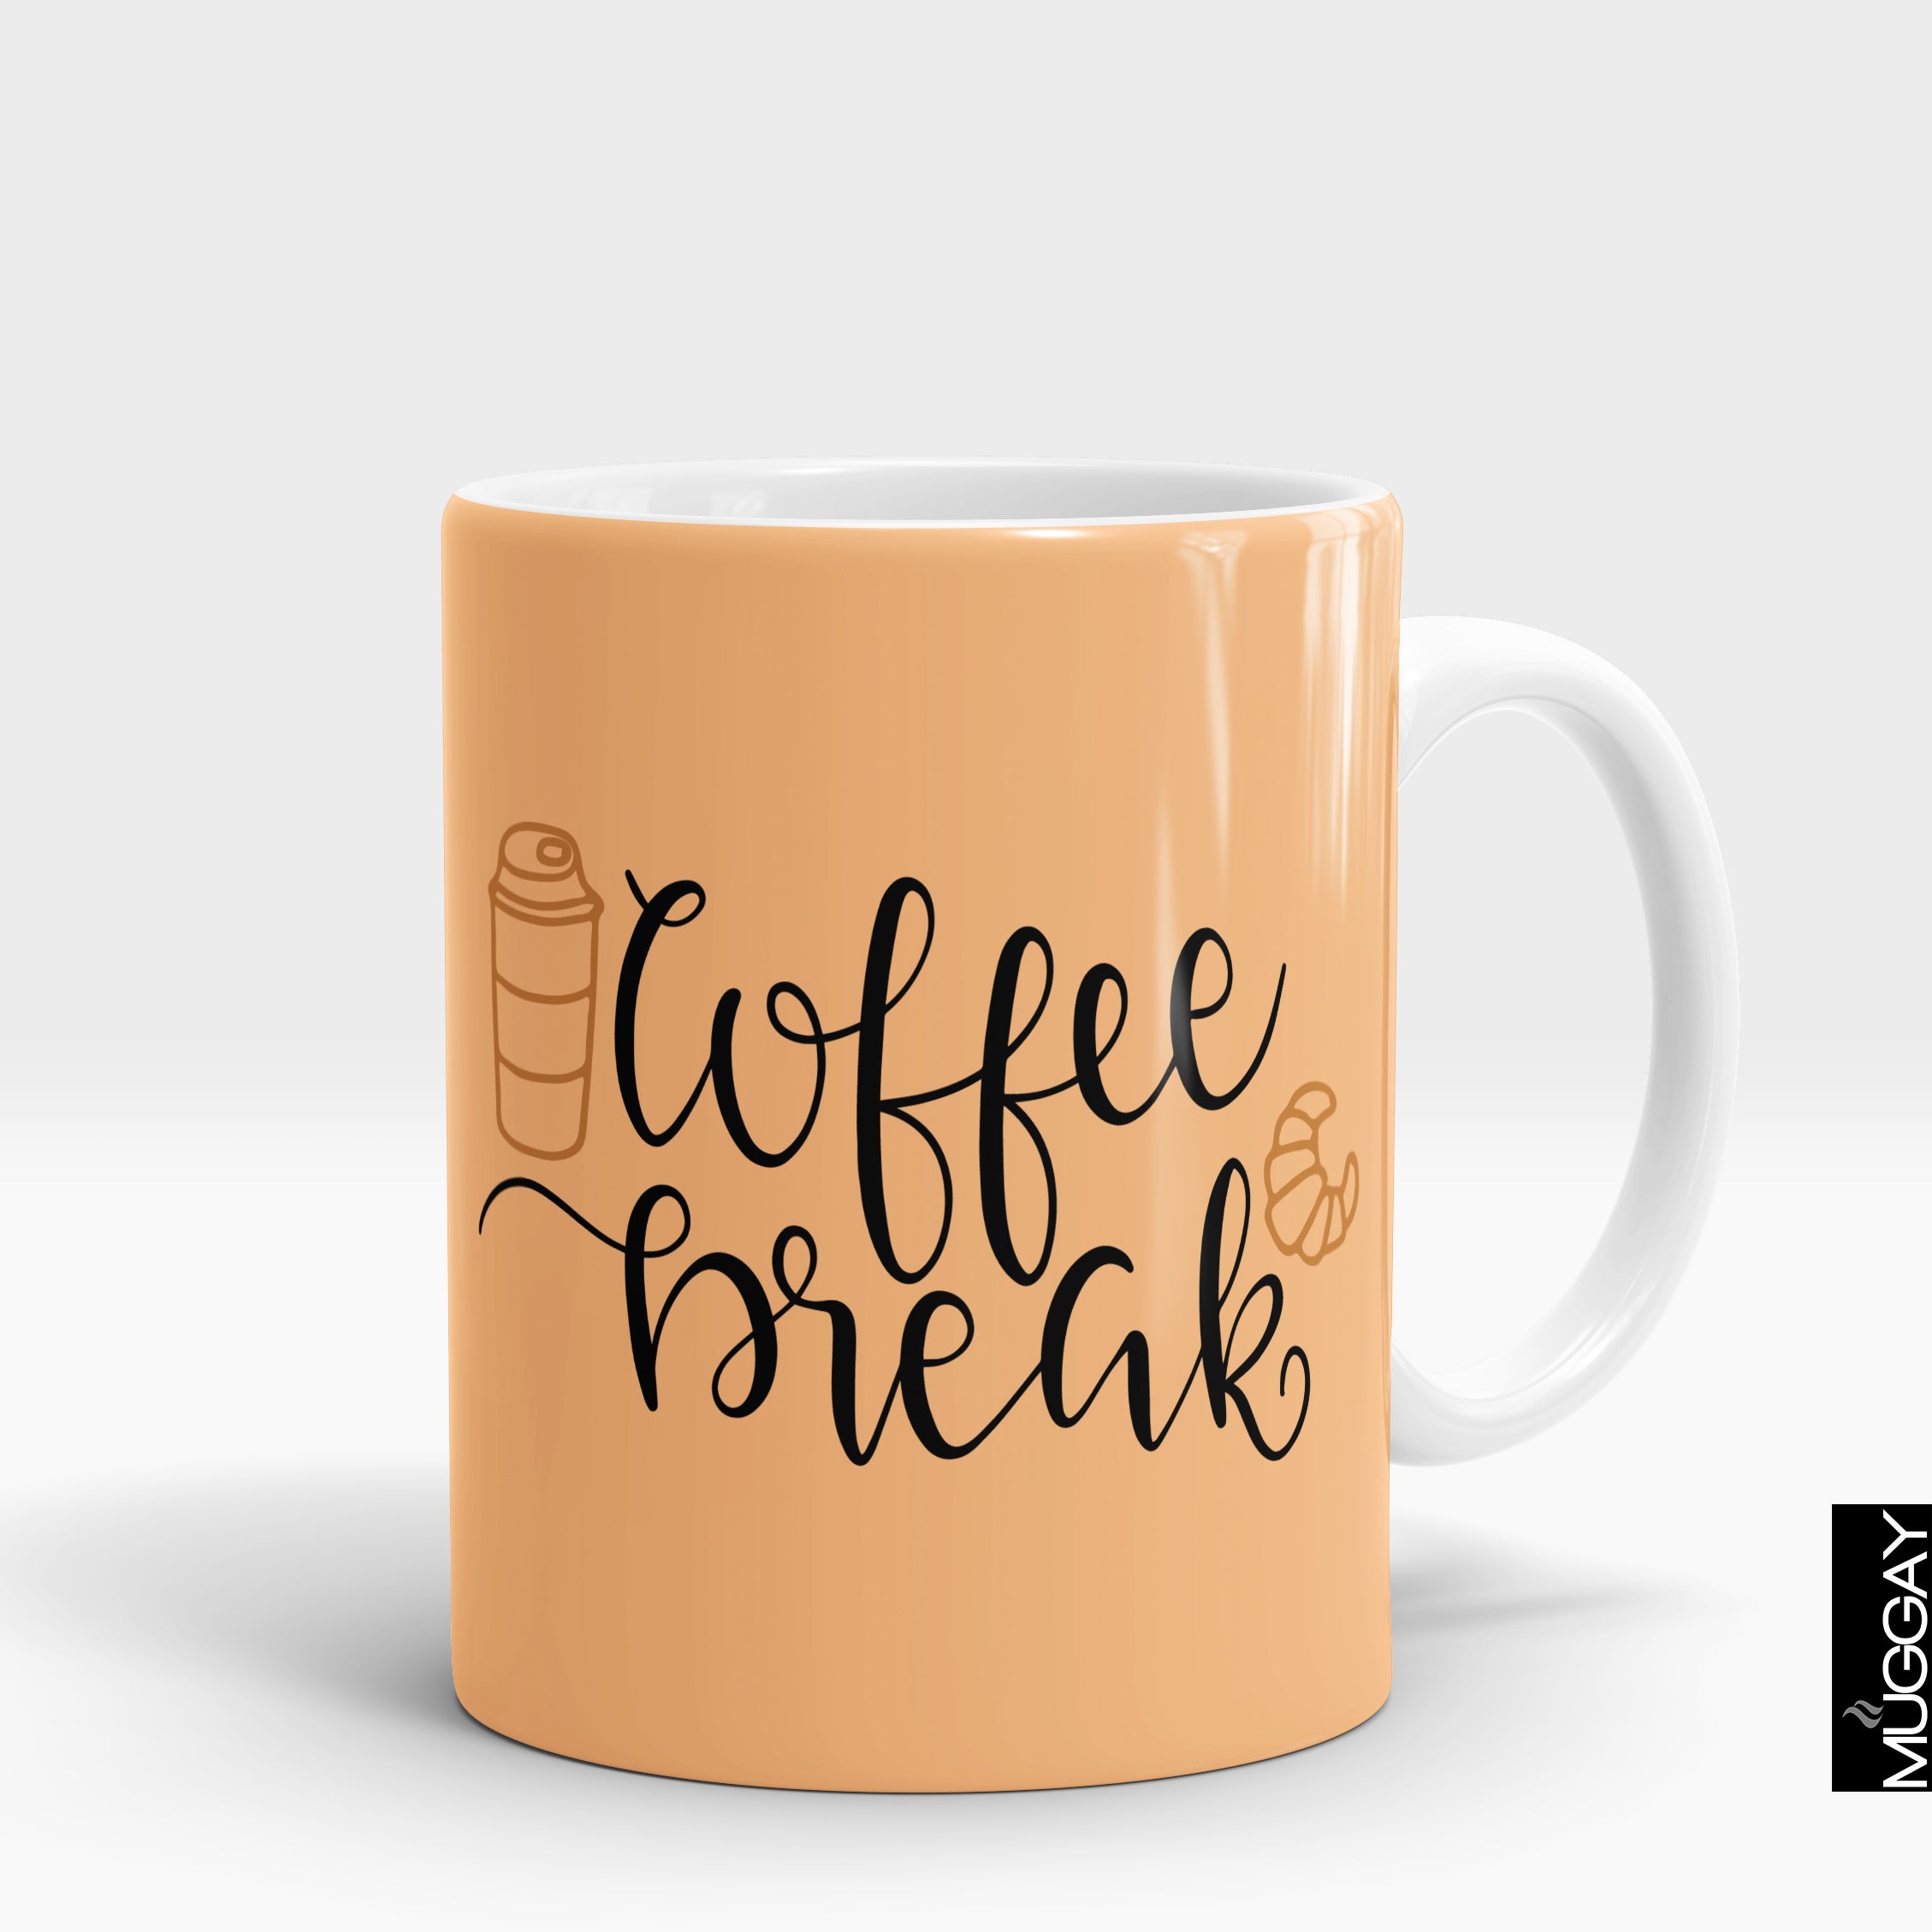 Coffee Break - Muggay.com - Mugs - Printing shop - truck Art mugs - Mug printing - Customized printing - Digital printing - Muggay 